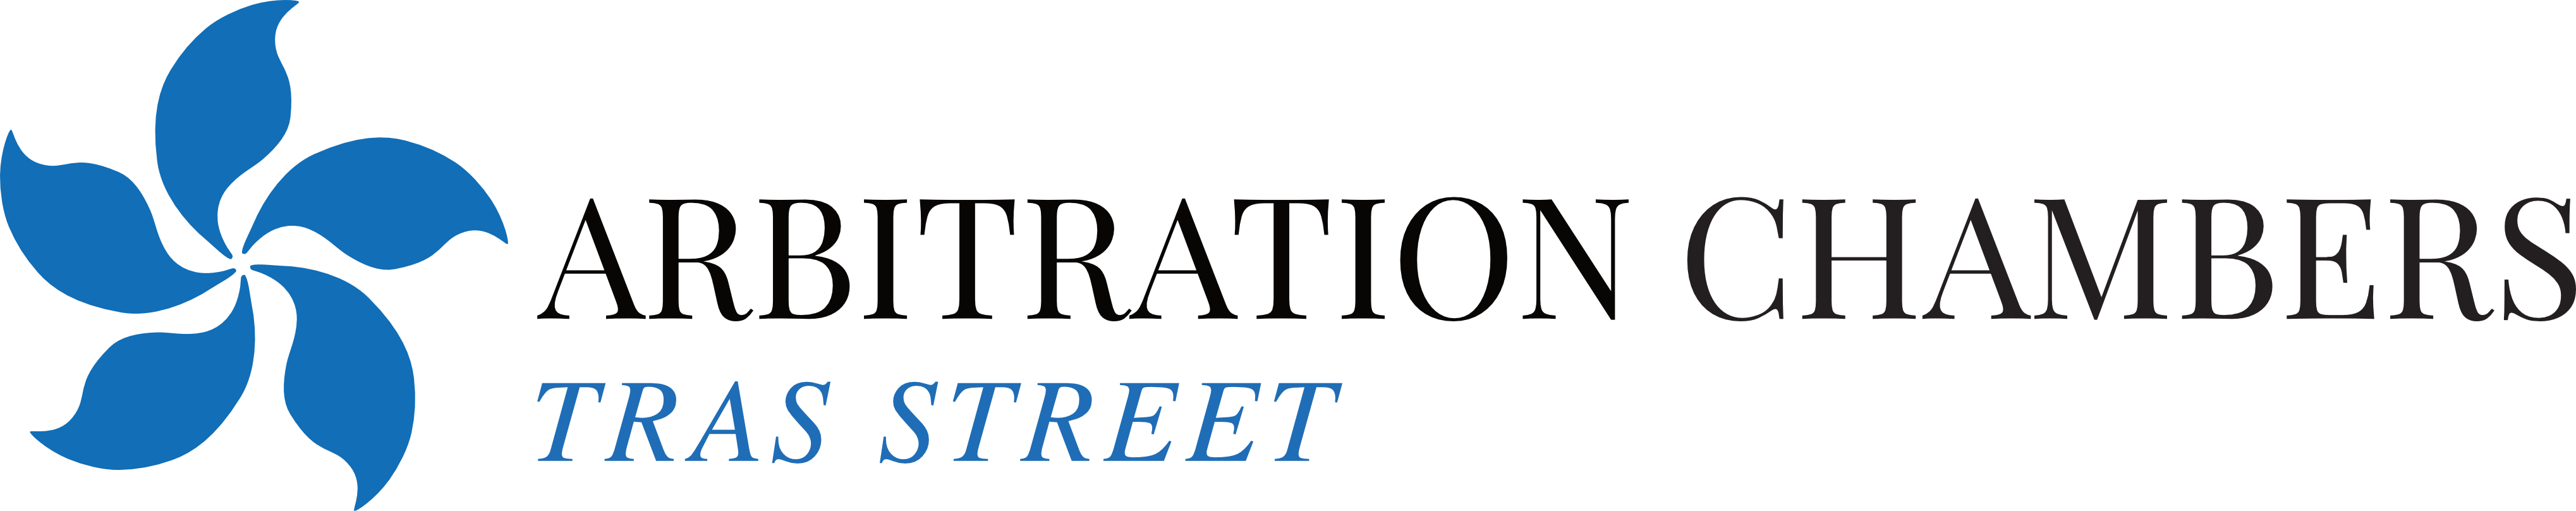 Arbitration Chambers Tras Street logo